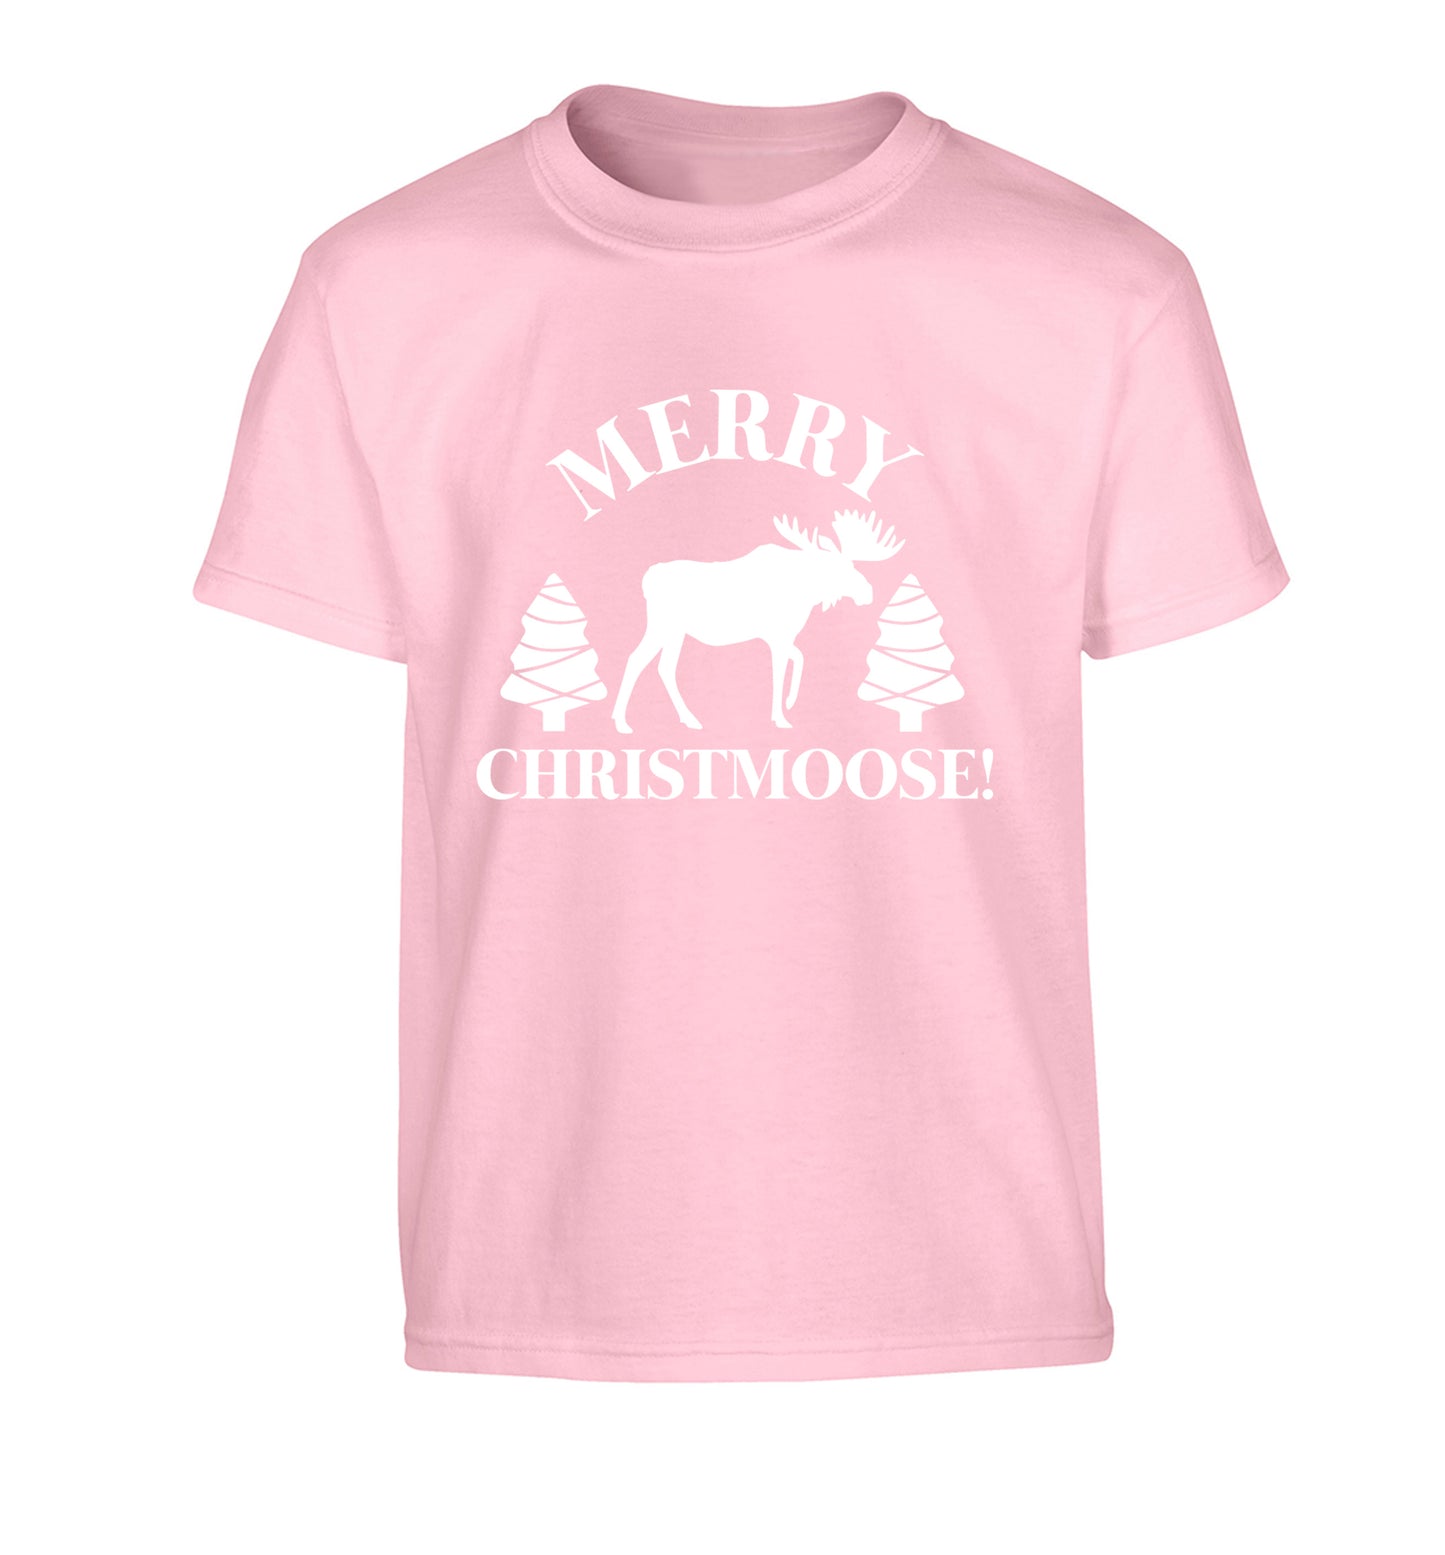 Merry Christmoose Children's light pink Tshirt 12-14 Years